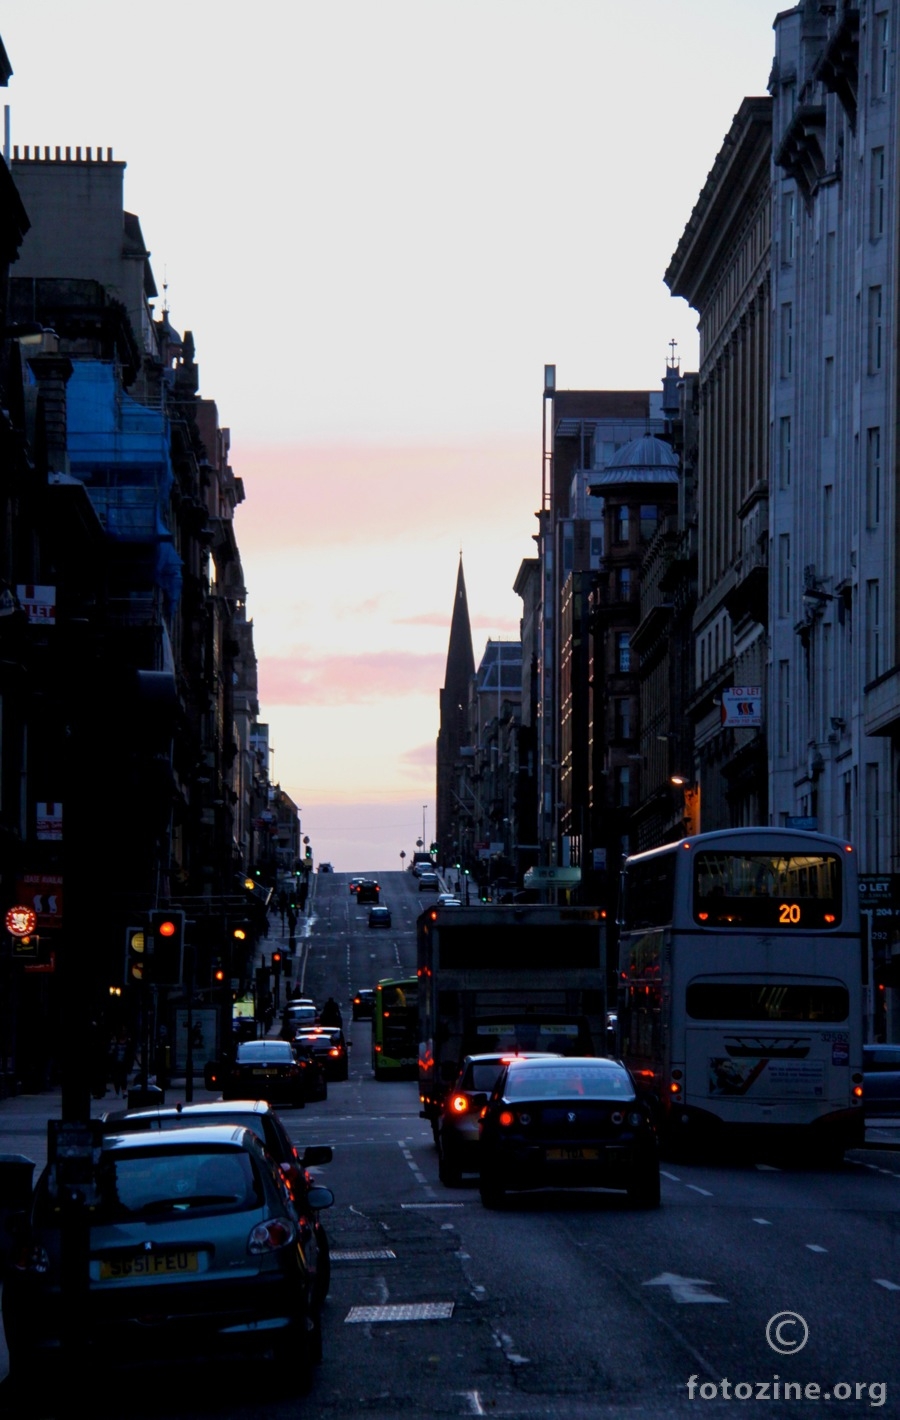 sunset in Glasgow